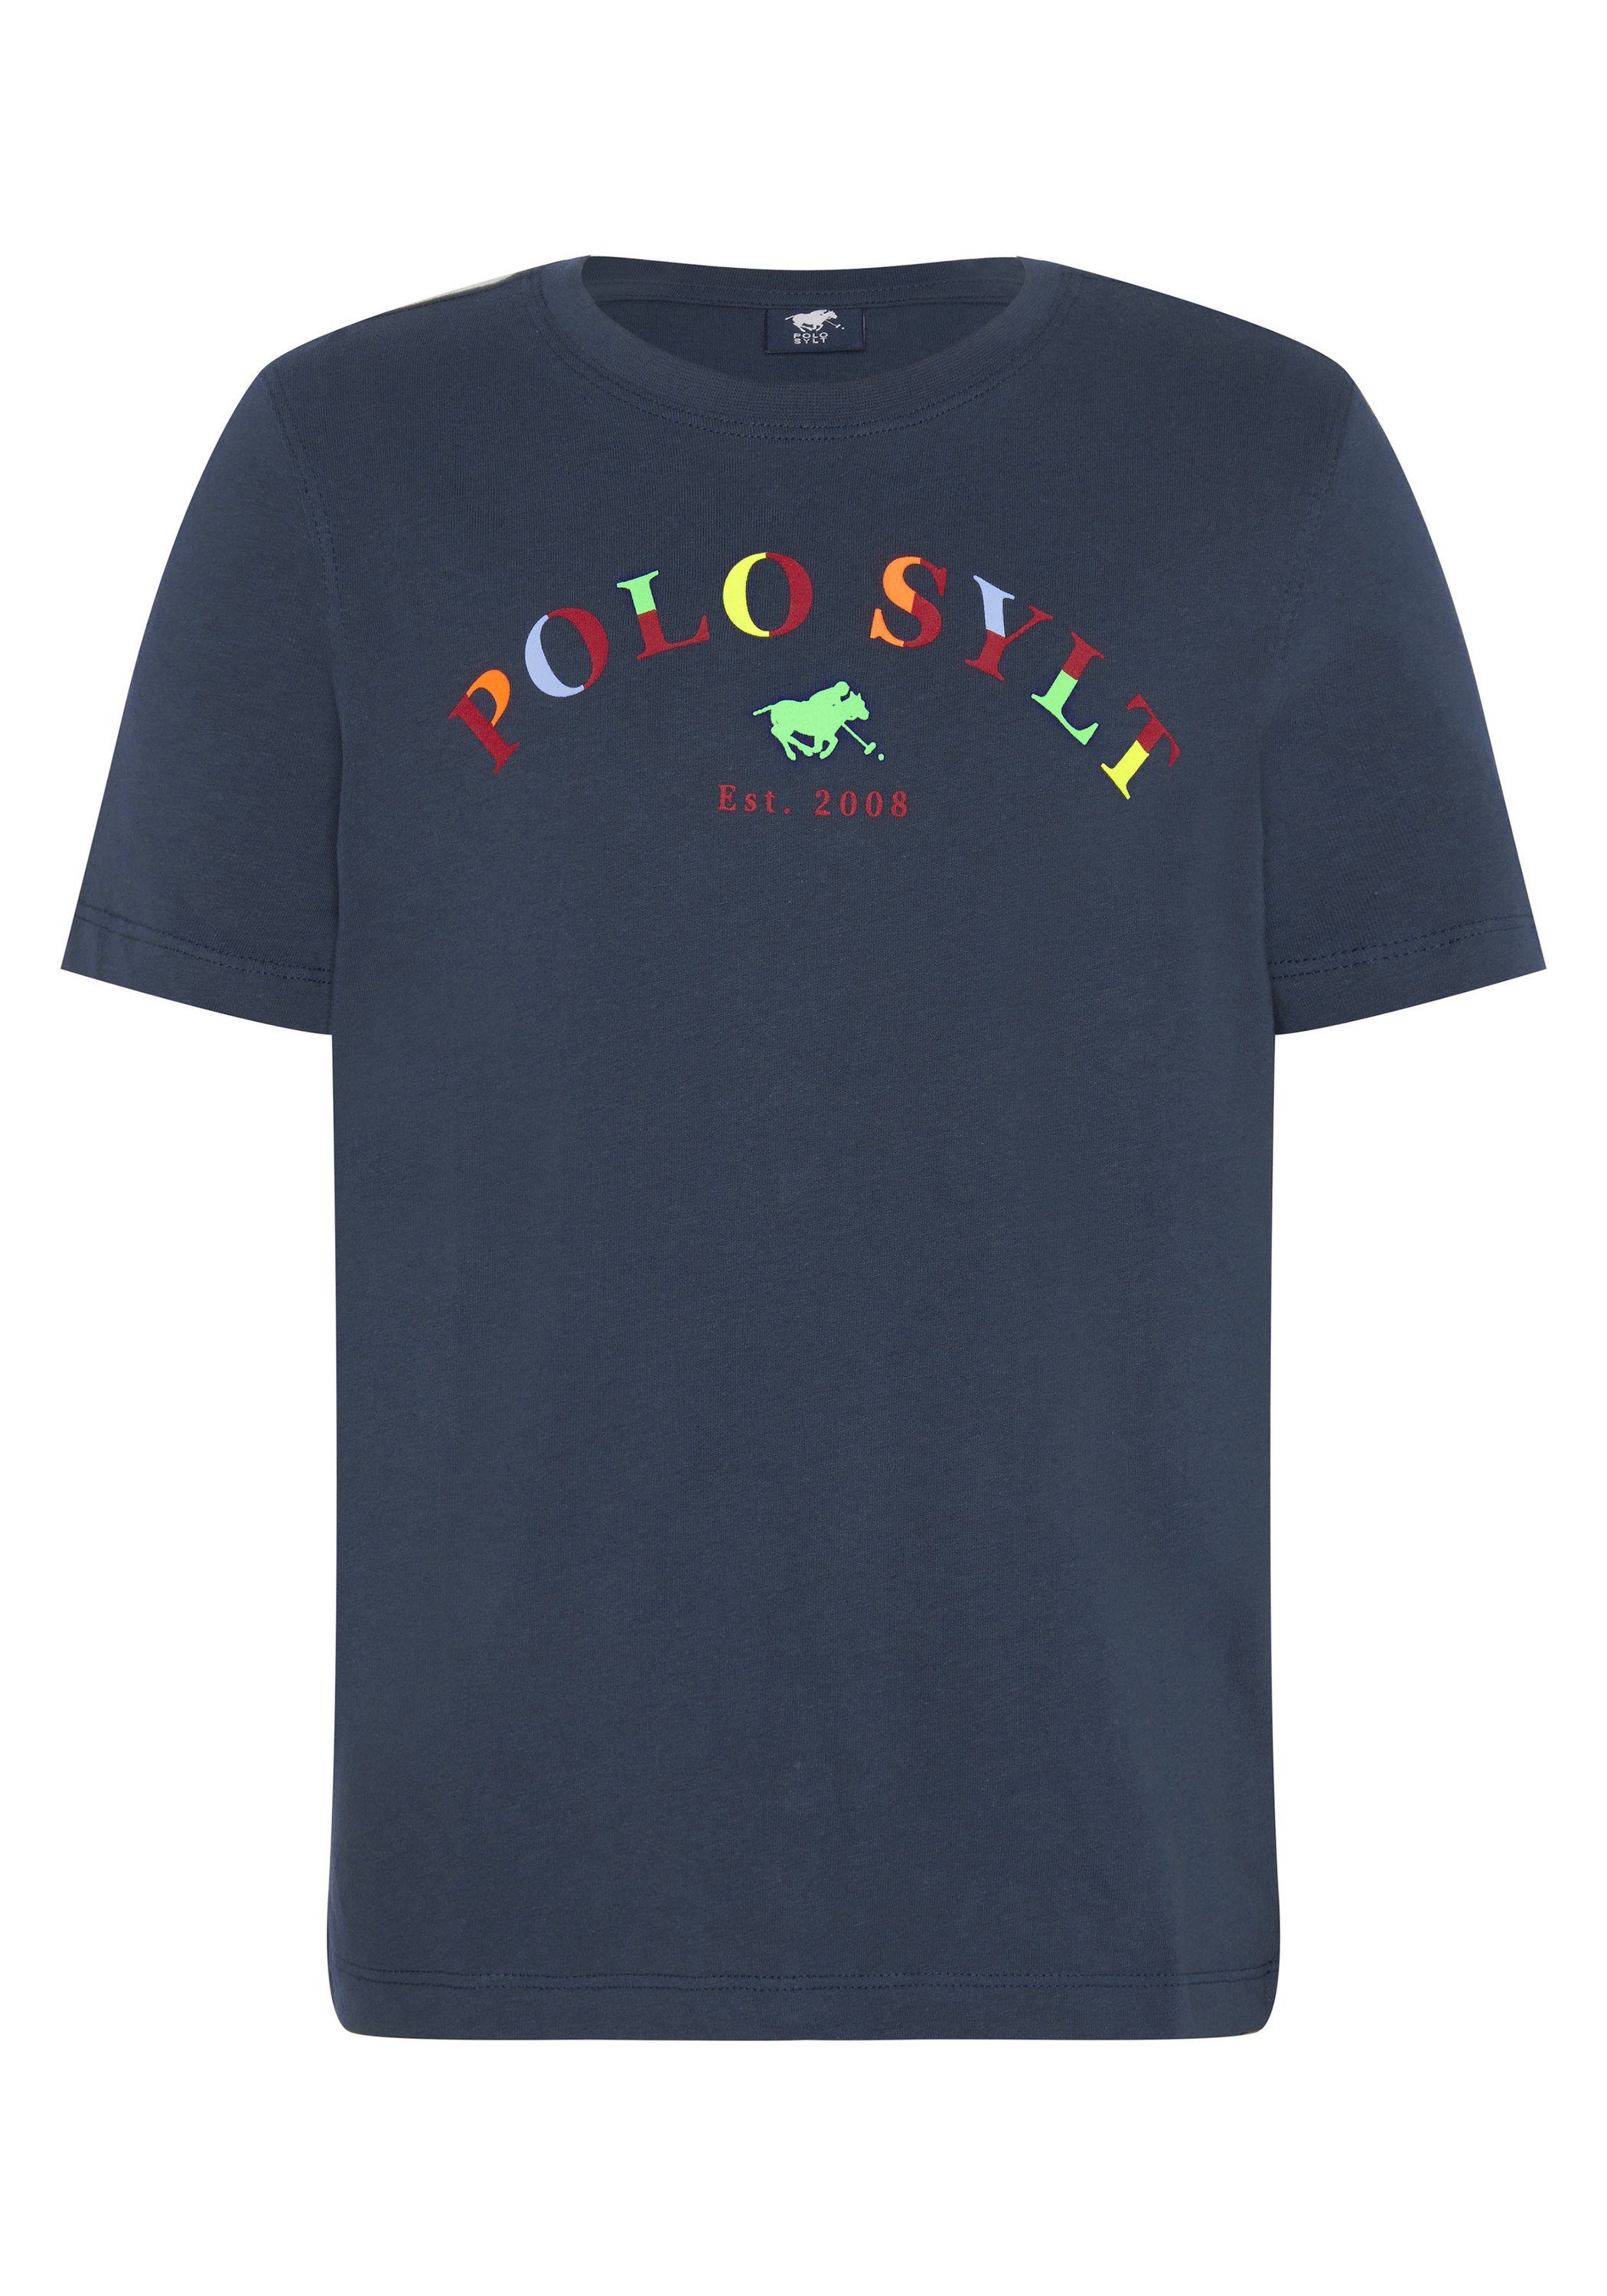 Polo Sylt Print-Shirt Total mit Logoprint Eclipse farbenfrohem 19-4010